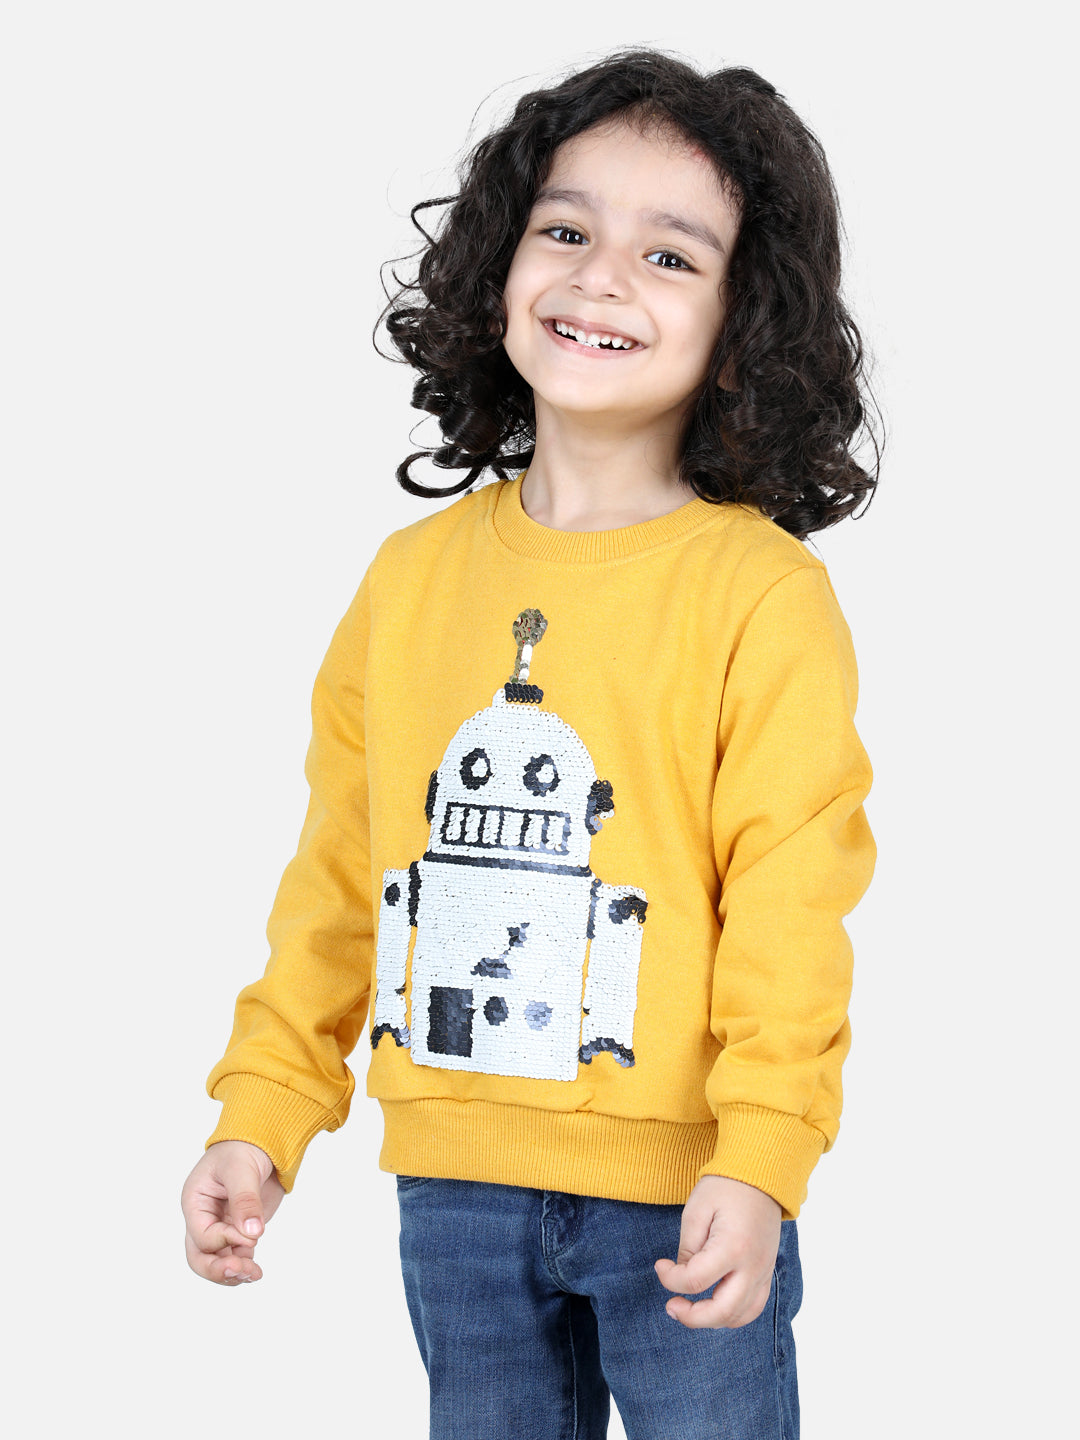 BownBee Full Sleeve Sweatshirt for Boys- Yellow